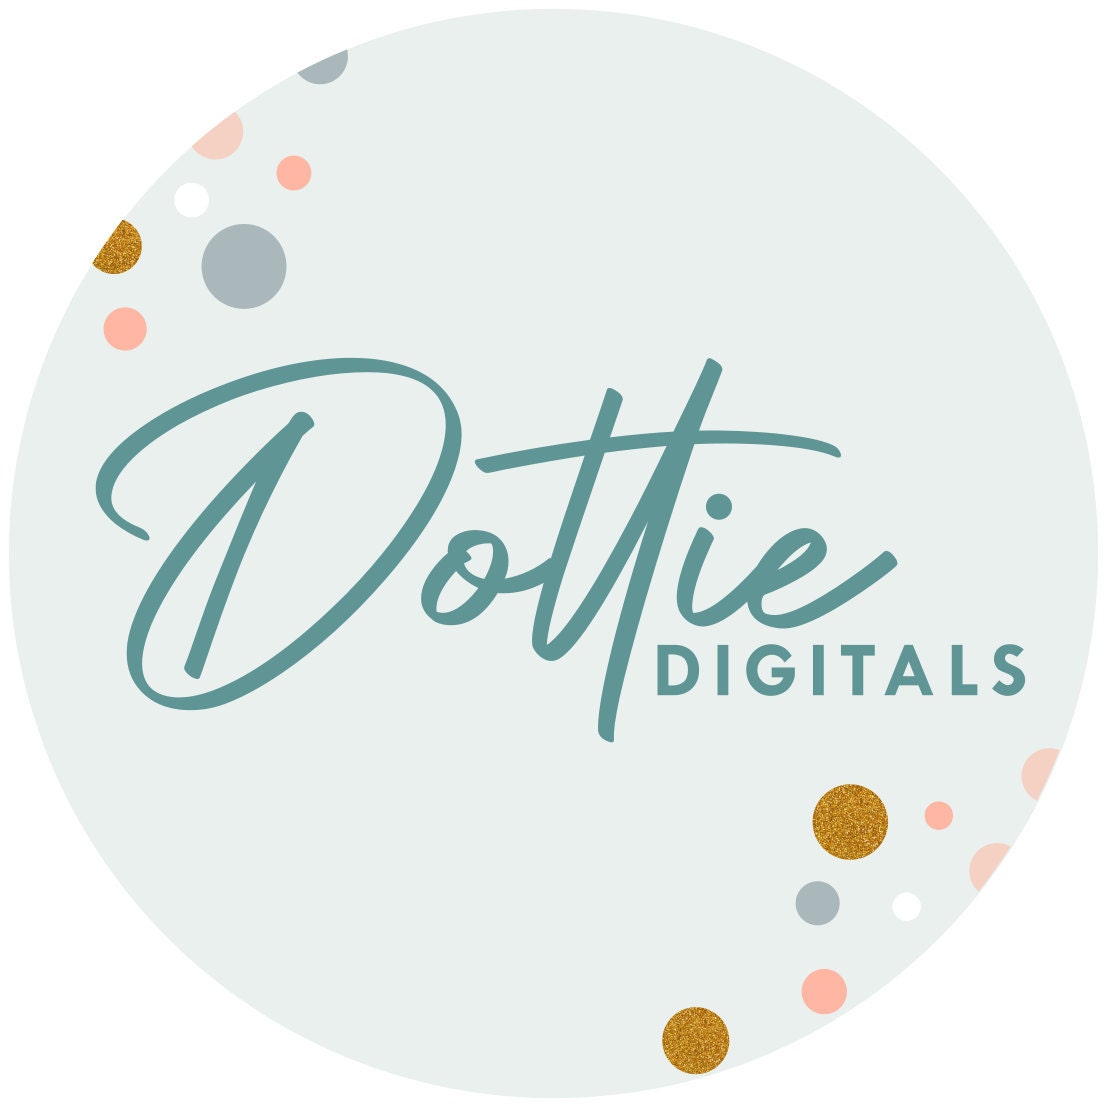 Dottie Digitals - True Crime Starbucks Cup SVG Hot Cup PNG DXF Cutting File  16oz Grande Instant Digital Download Travel Coffee